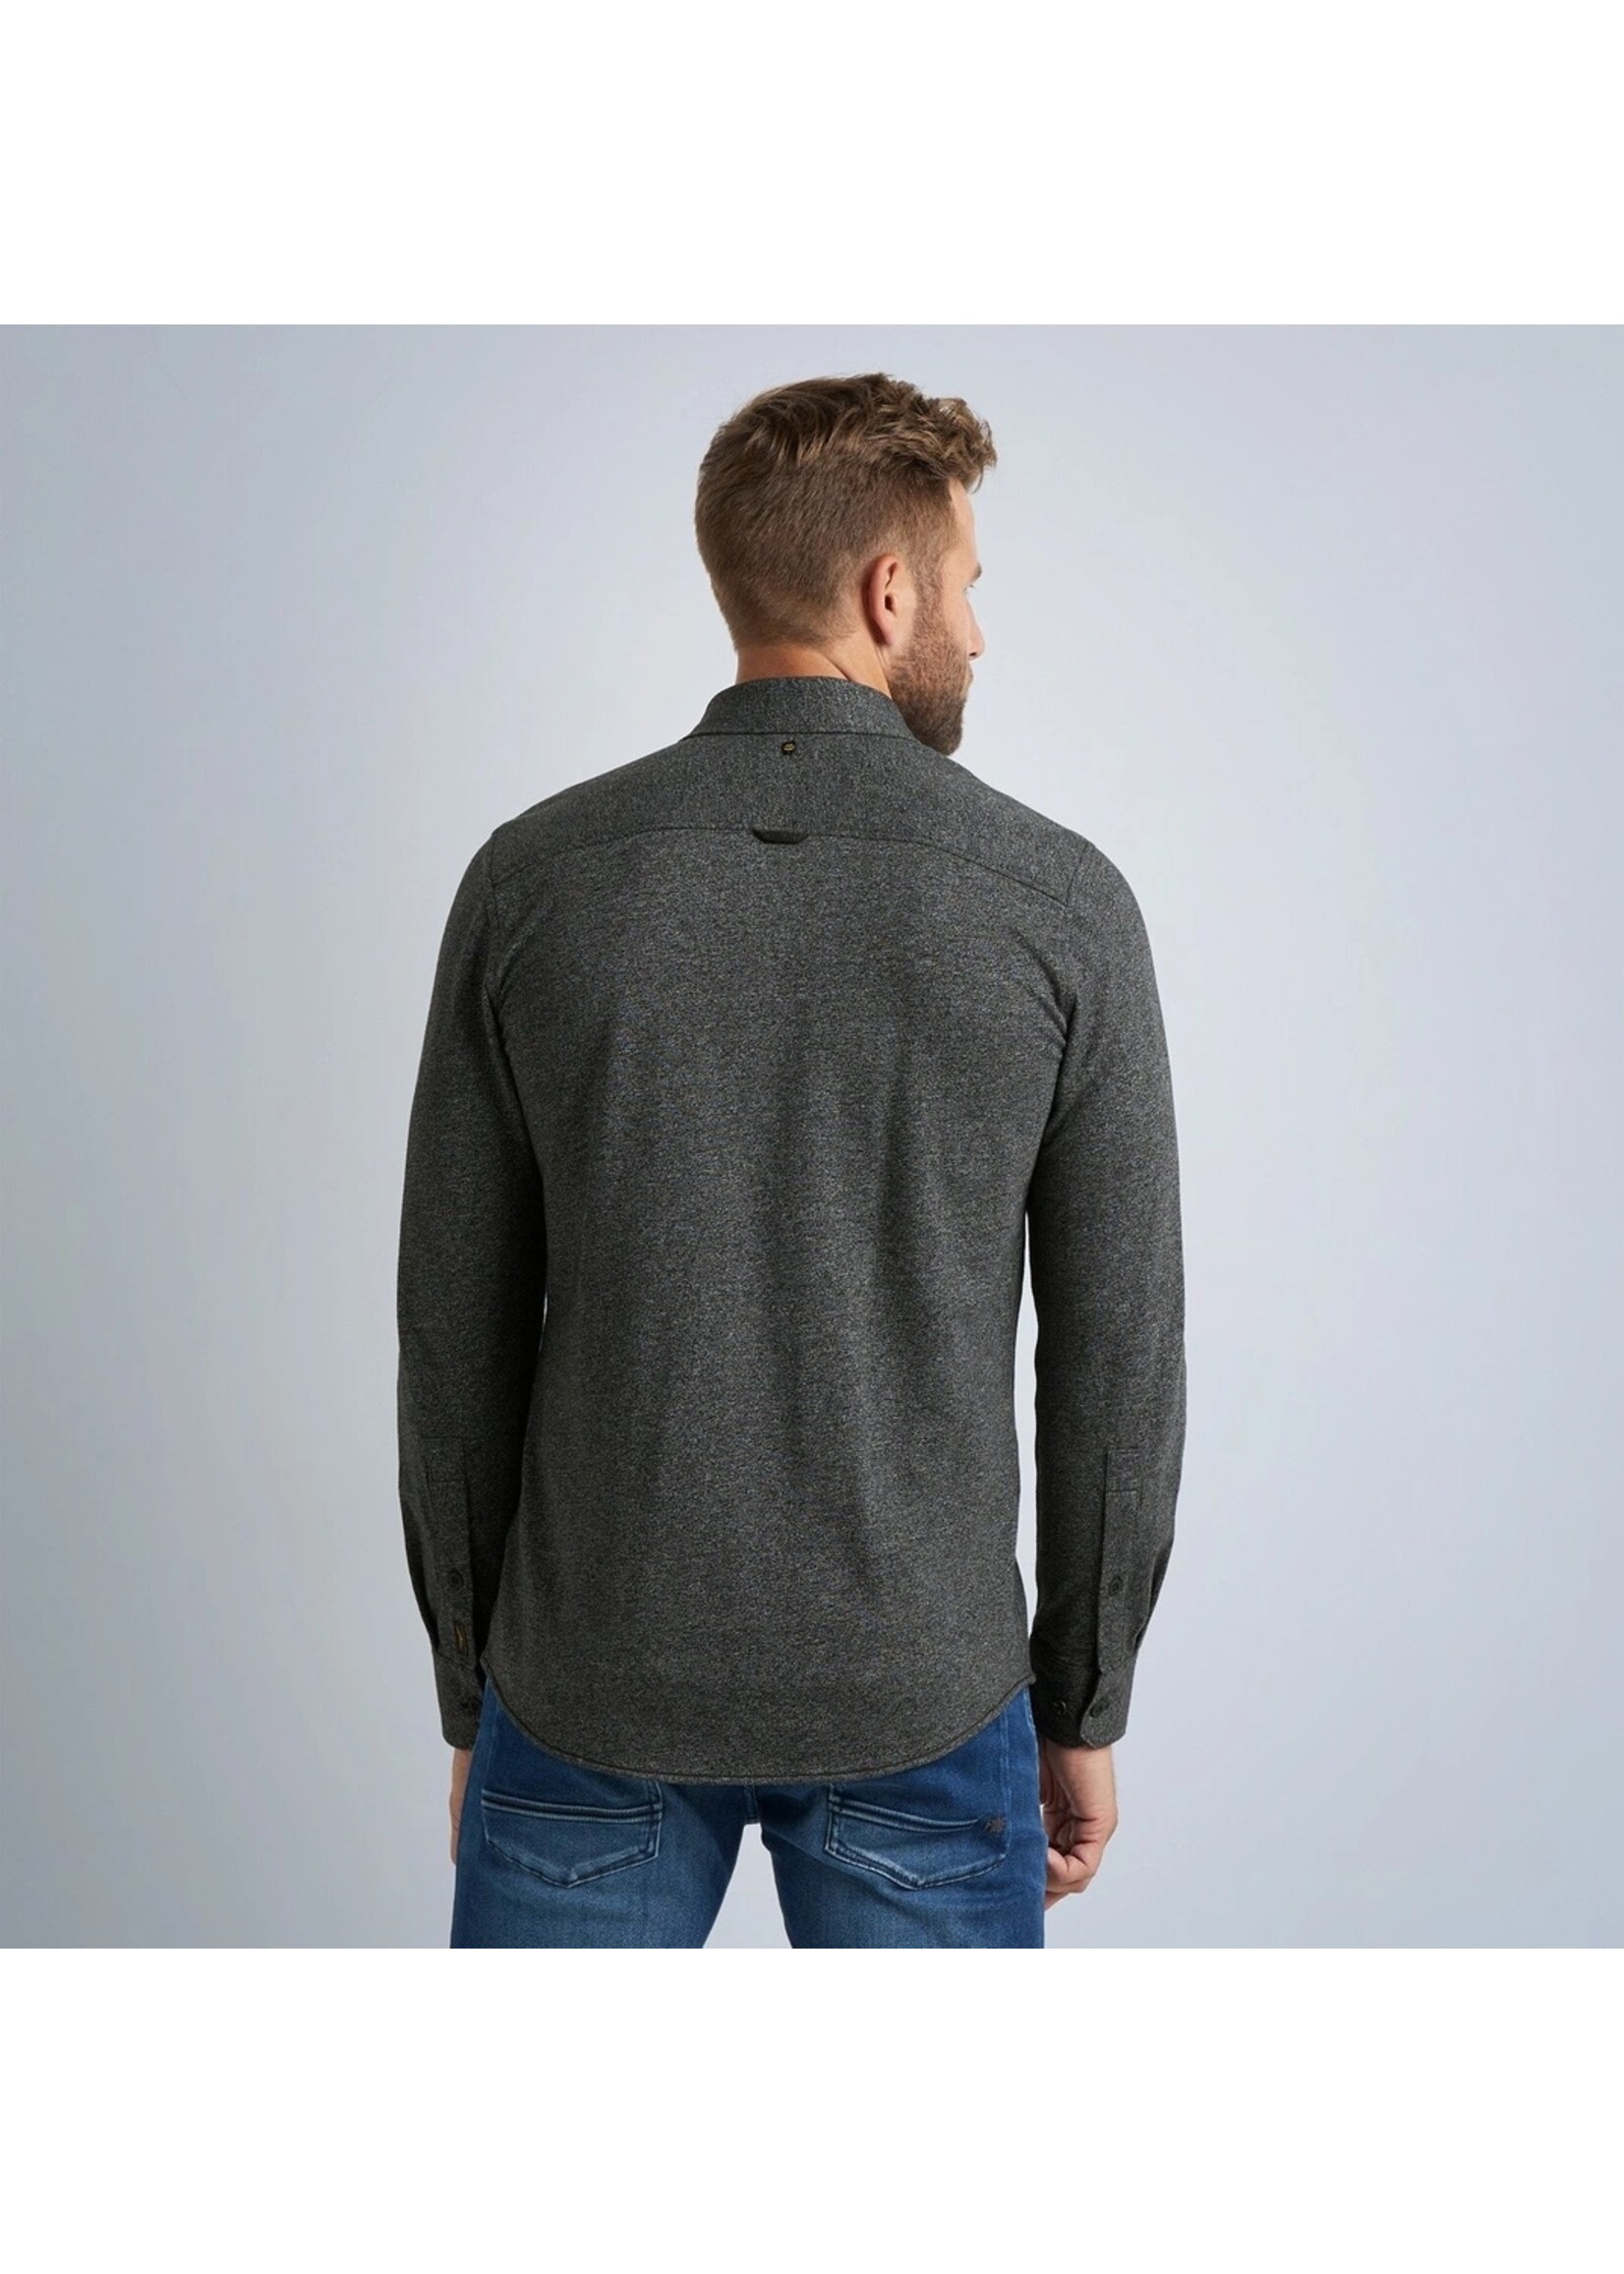 PME-Legend Long Sleeve Shirt Cotton Jersey Grindle Fleece